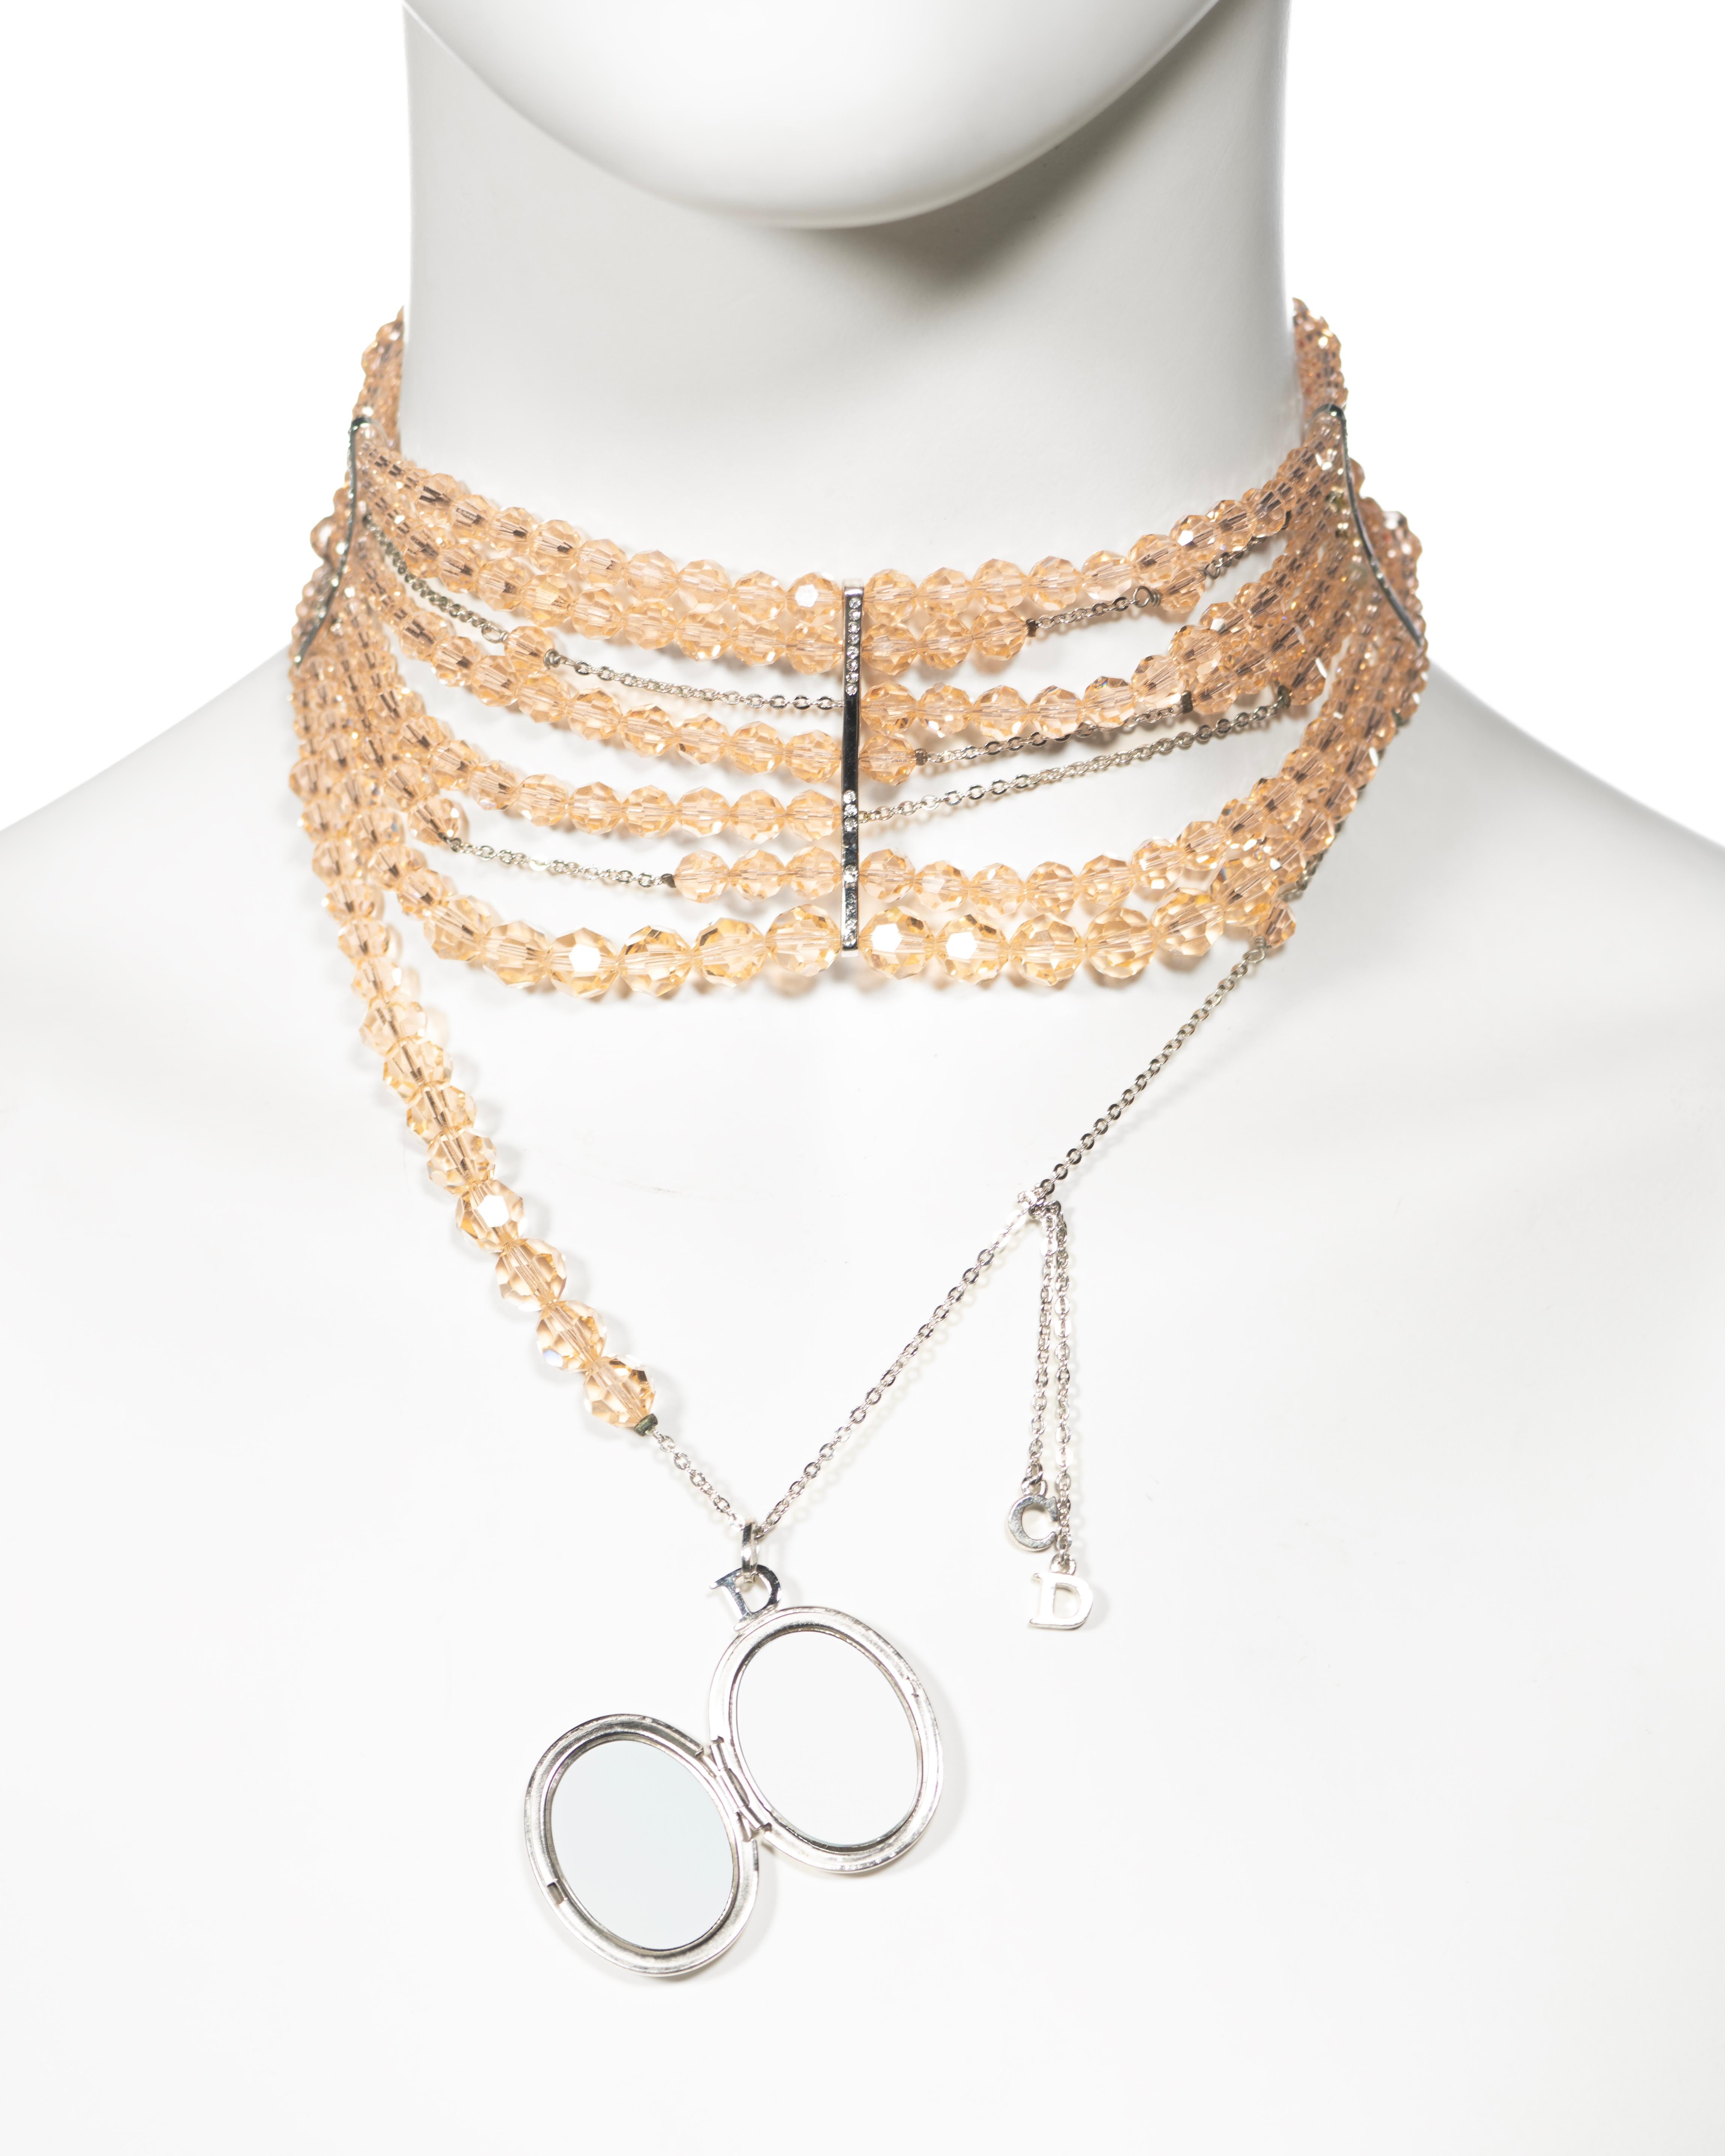 Christian Dior by John Galliano Distressed Peach Bead Choker Necklace, c. 2004 2